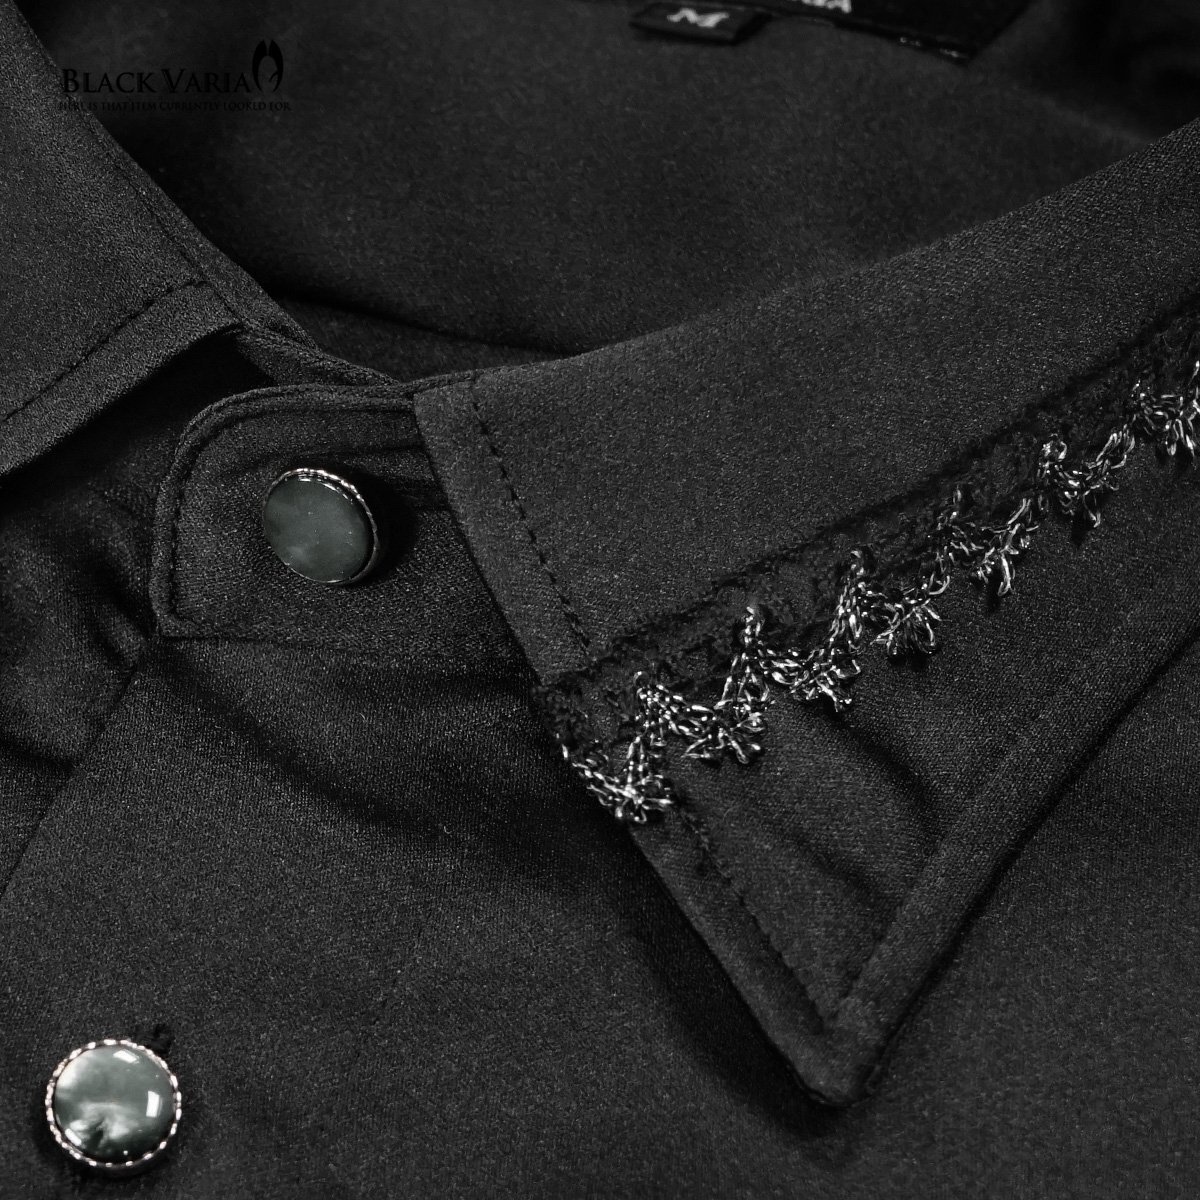 21170-2bk BlackVaria 襟レース ストーン風装飾ボタン ドレスシャツ パウダーサテン メンズ(ブラックレース黒シャツ) L パーティー 上品_画像5